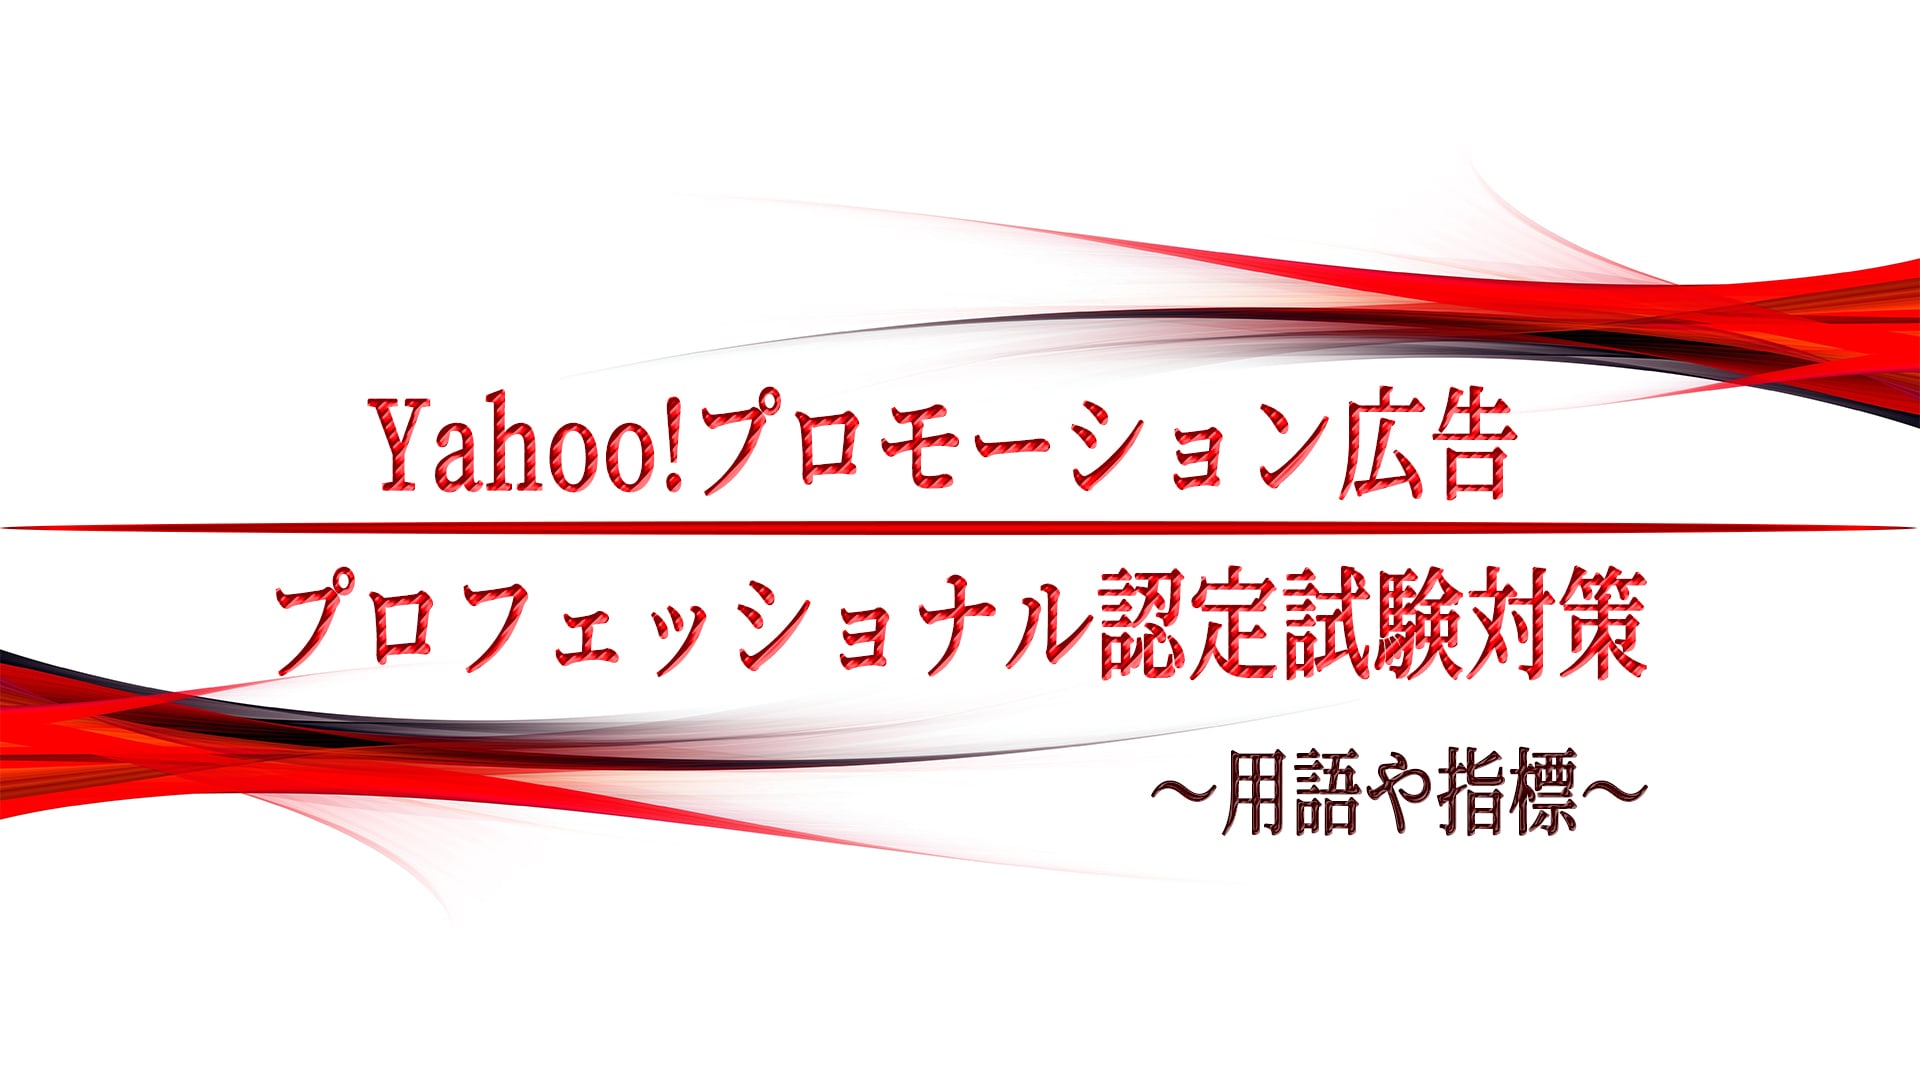 Yahoo!プロモーション広告プロフェッショナル認定試験対策〜用語や指標〜